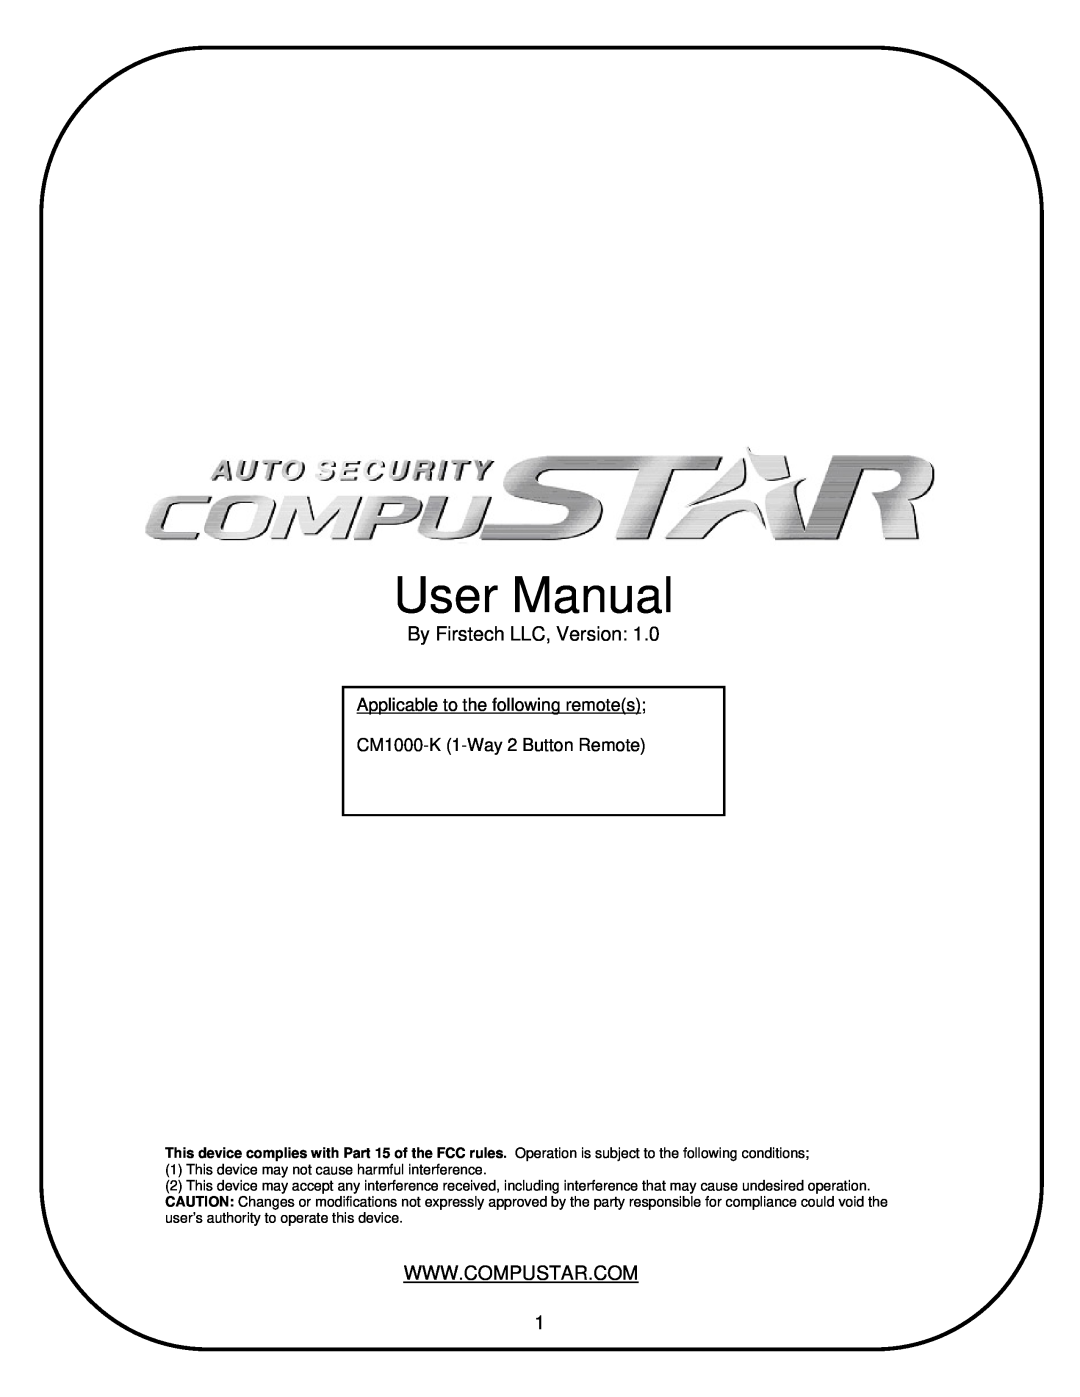 CompuSTAR CM1000-K user manual By Firstech LLC, Version 